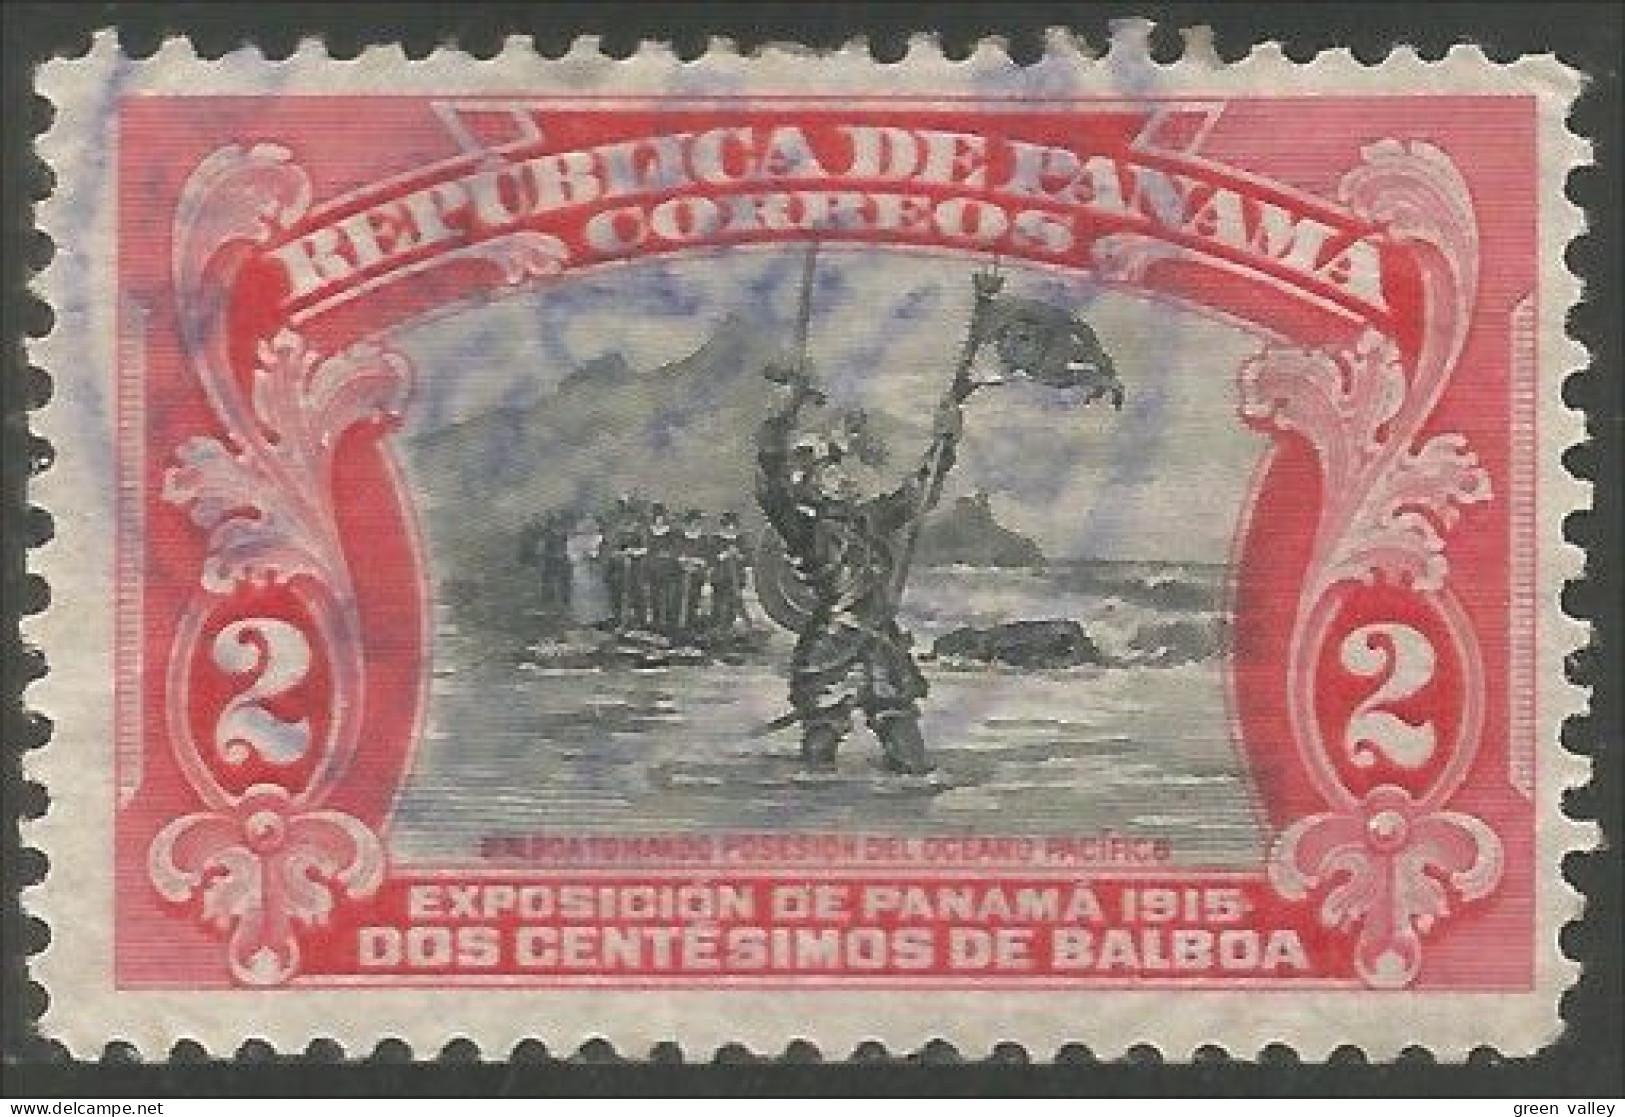 720 Panama Pacific Exposition 1915 2c Balboa (PAN-12) - Panama